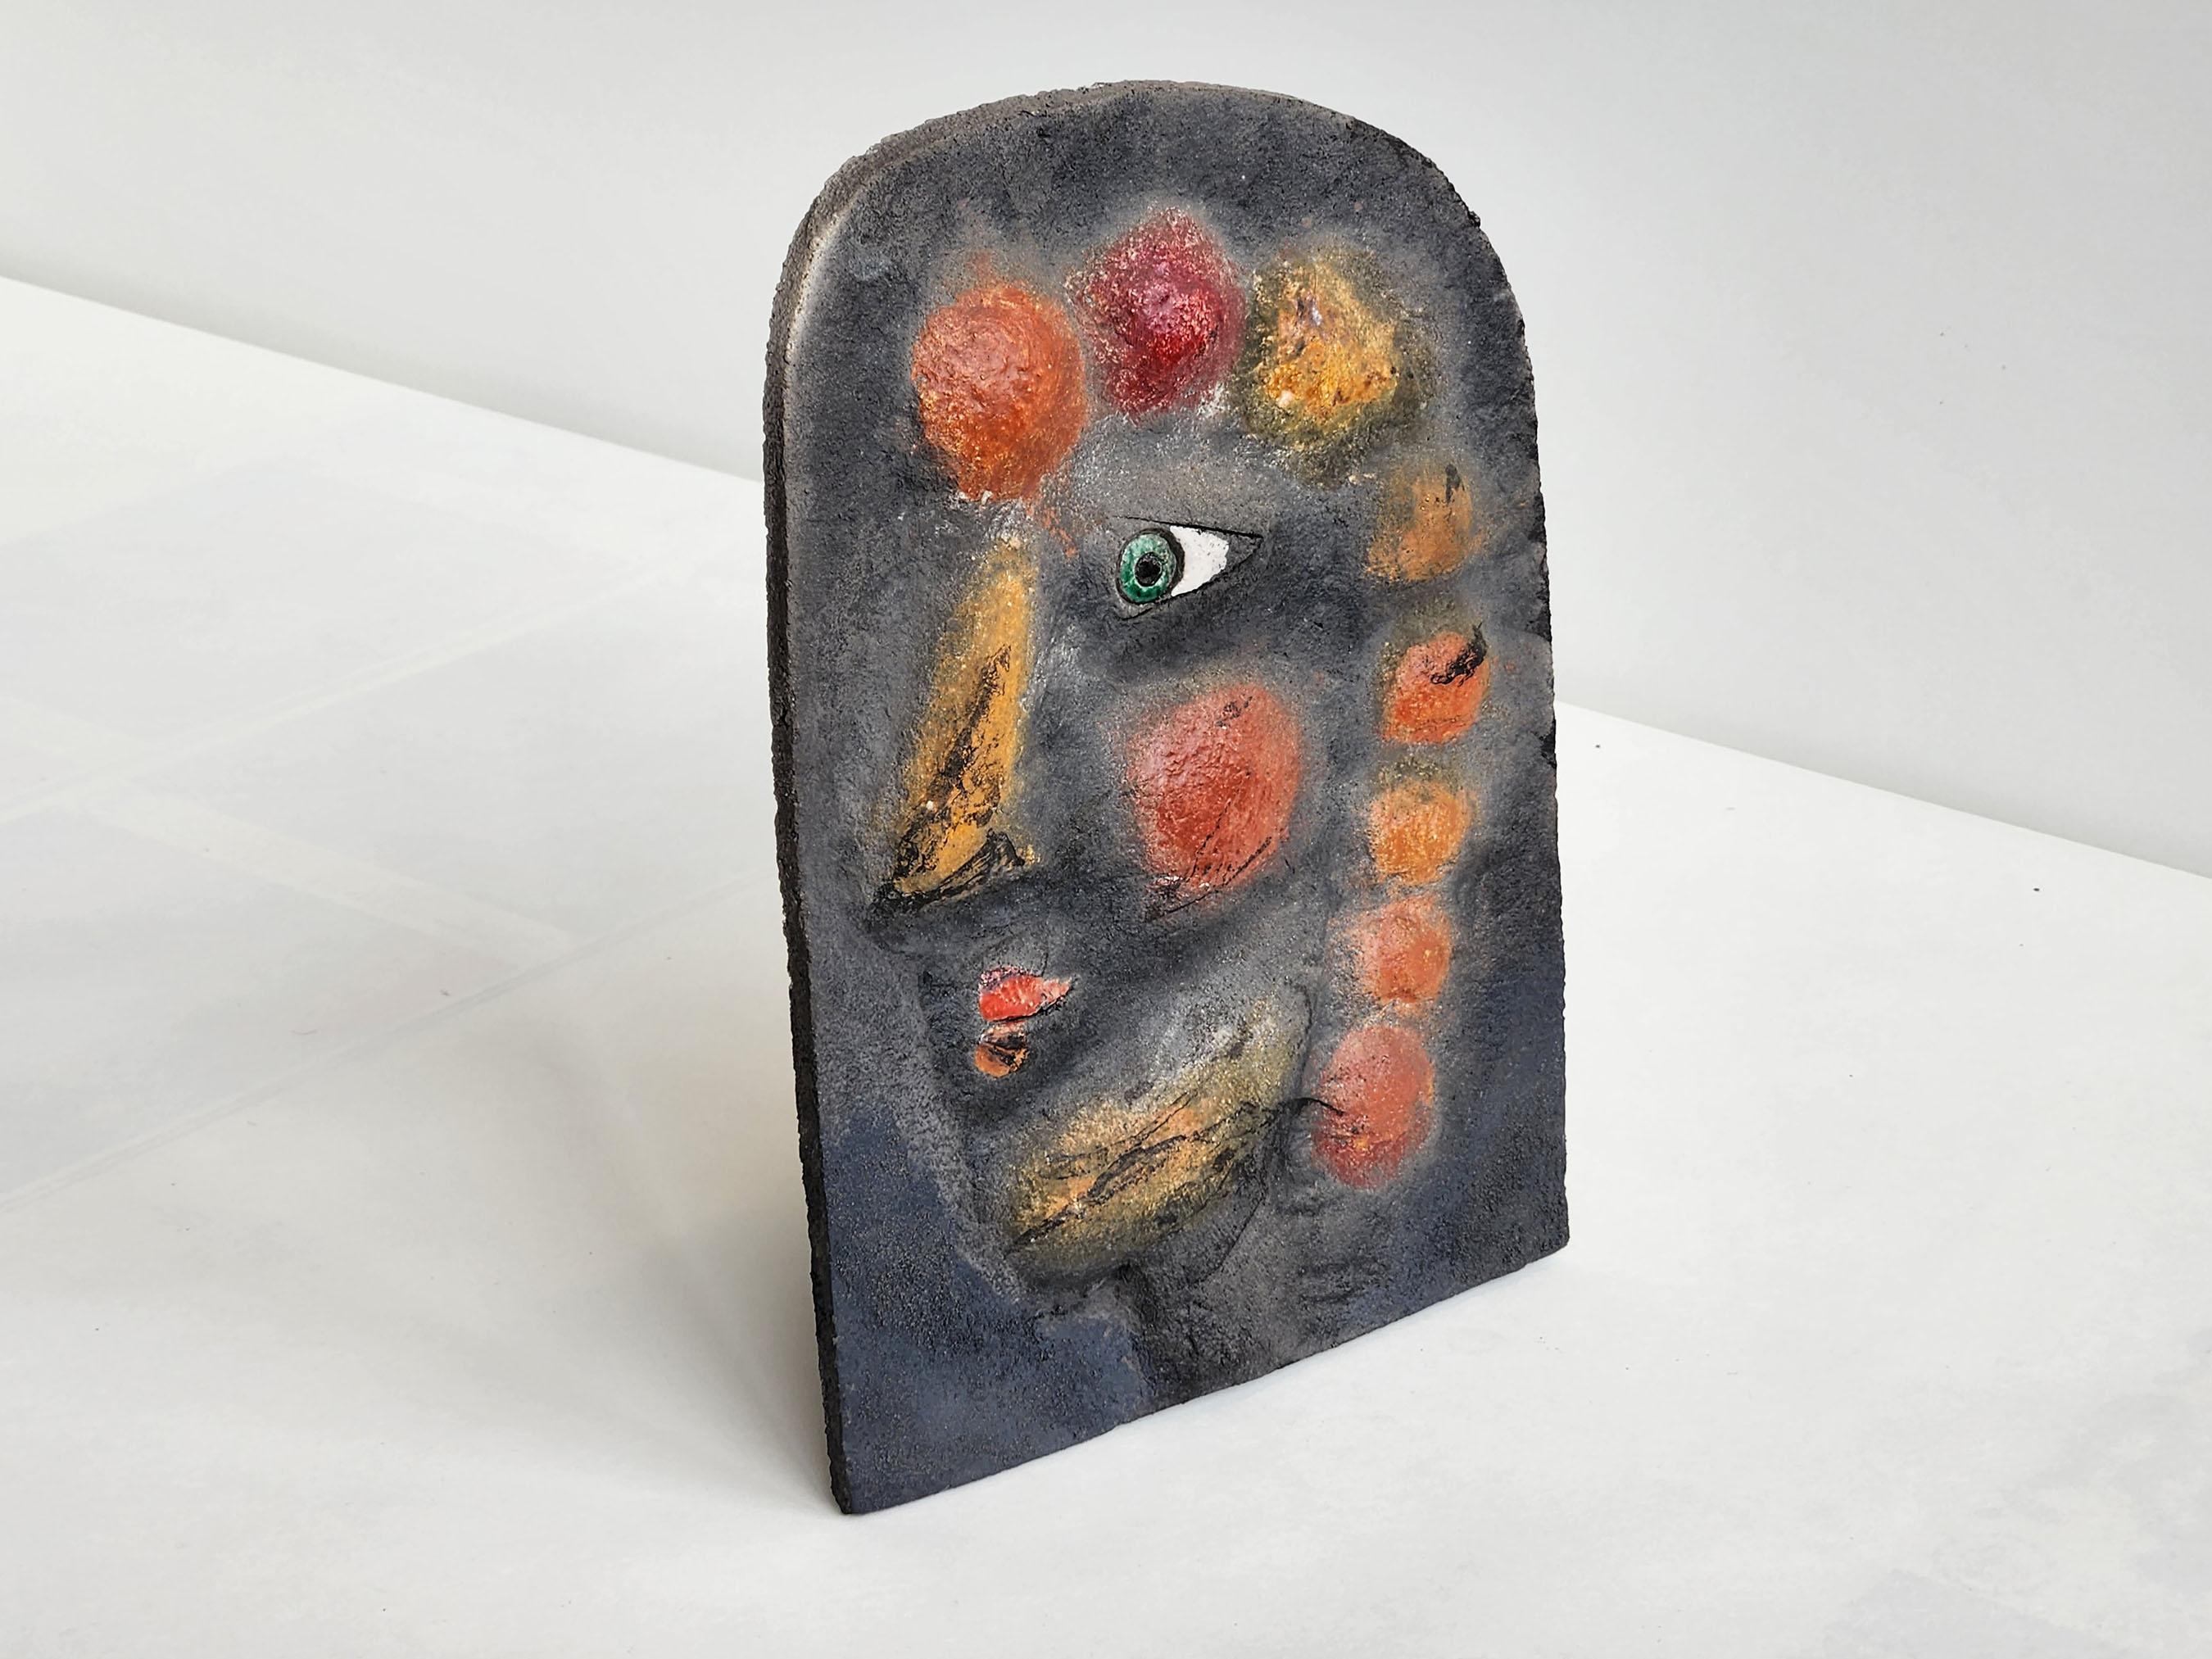 Vintage ceramic sculpture - Face Relief 
by Roger Capron Vallauris, France.